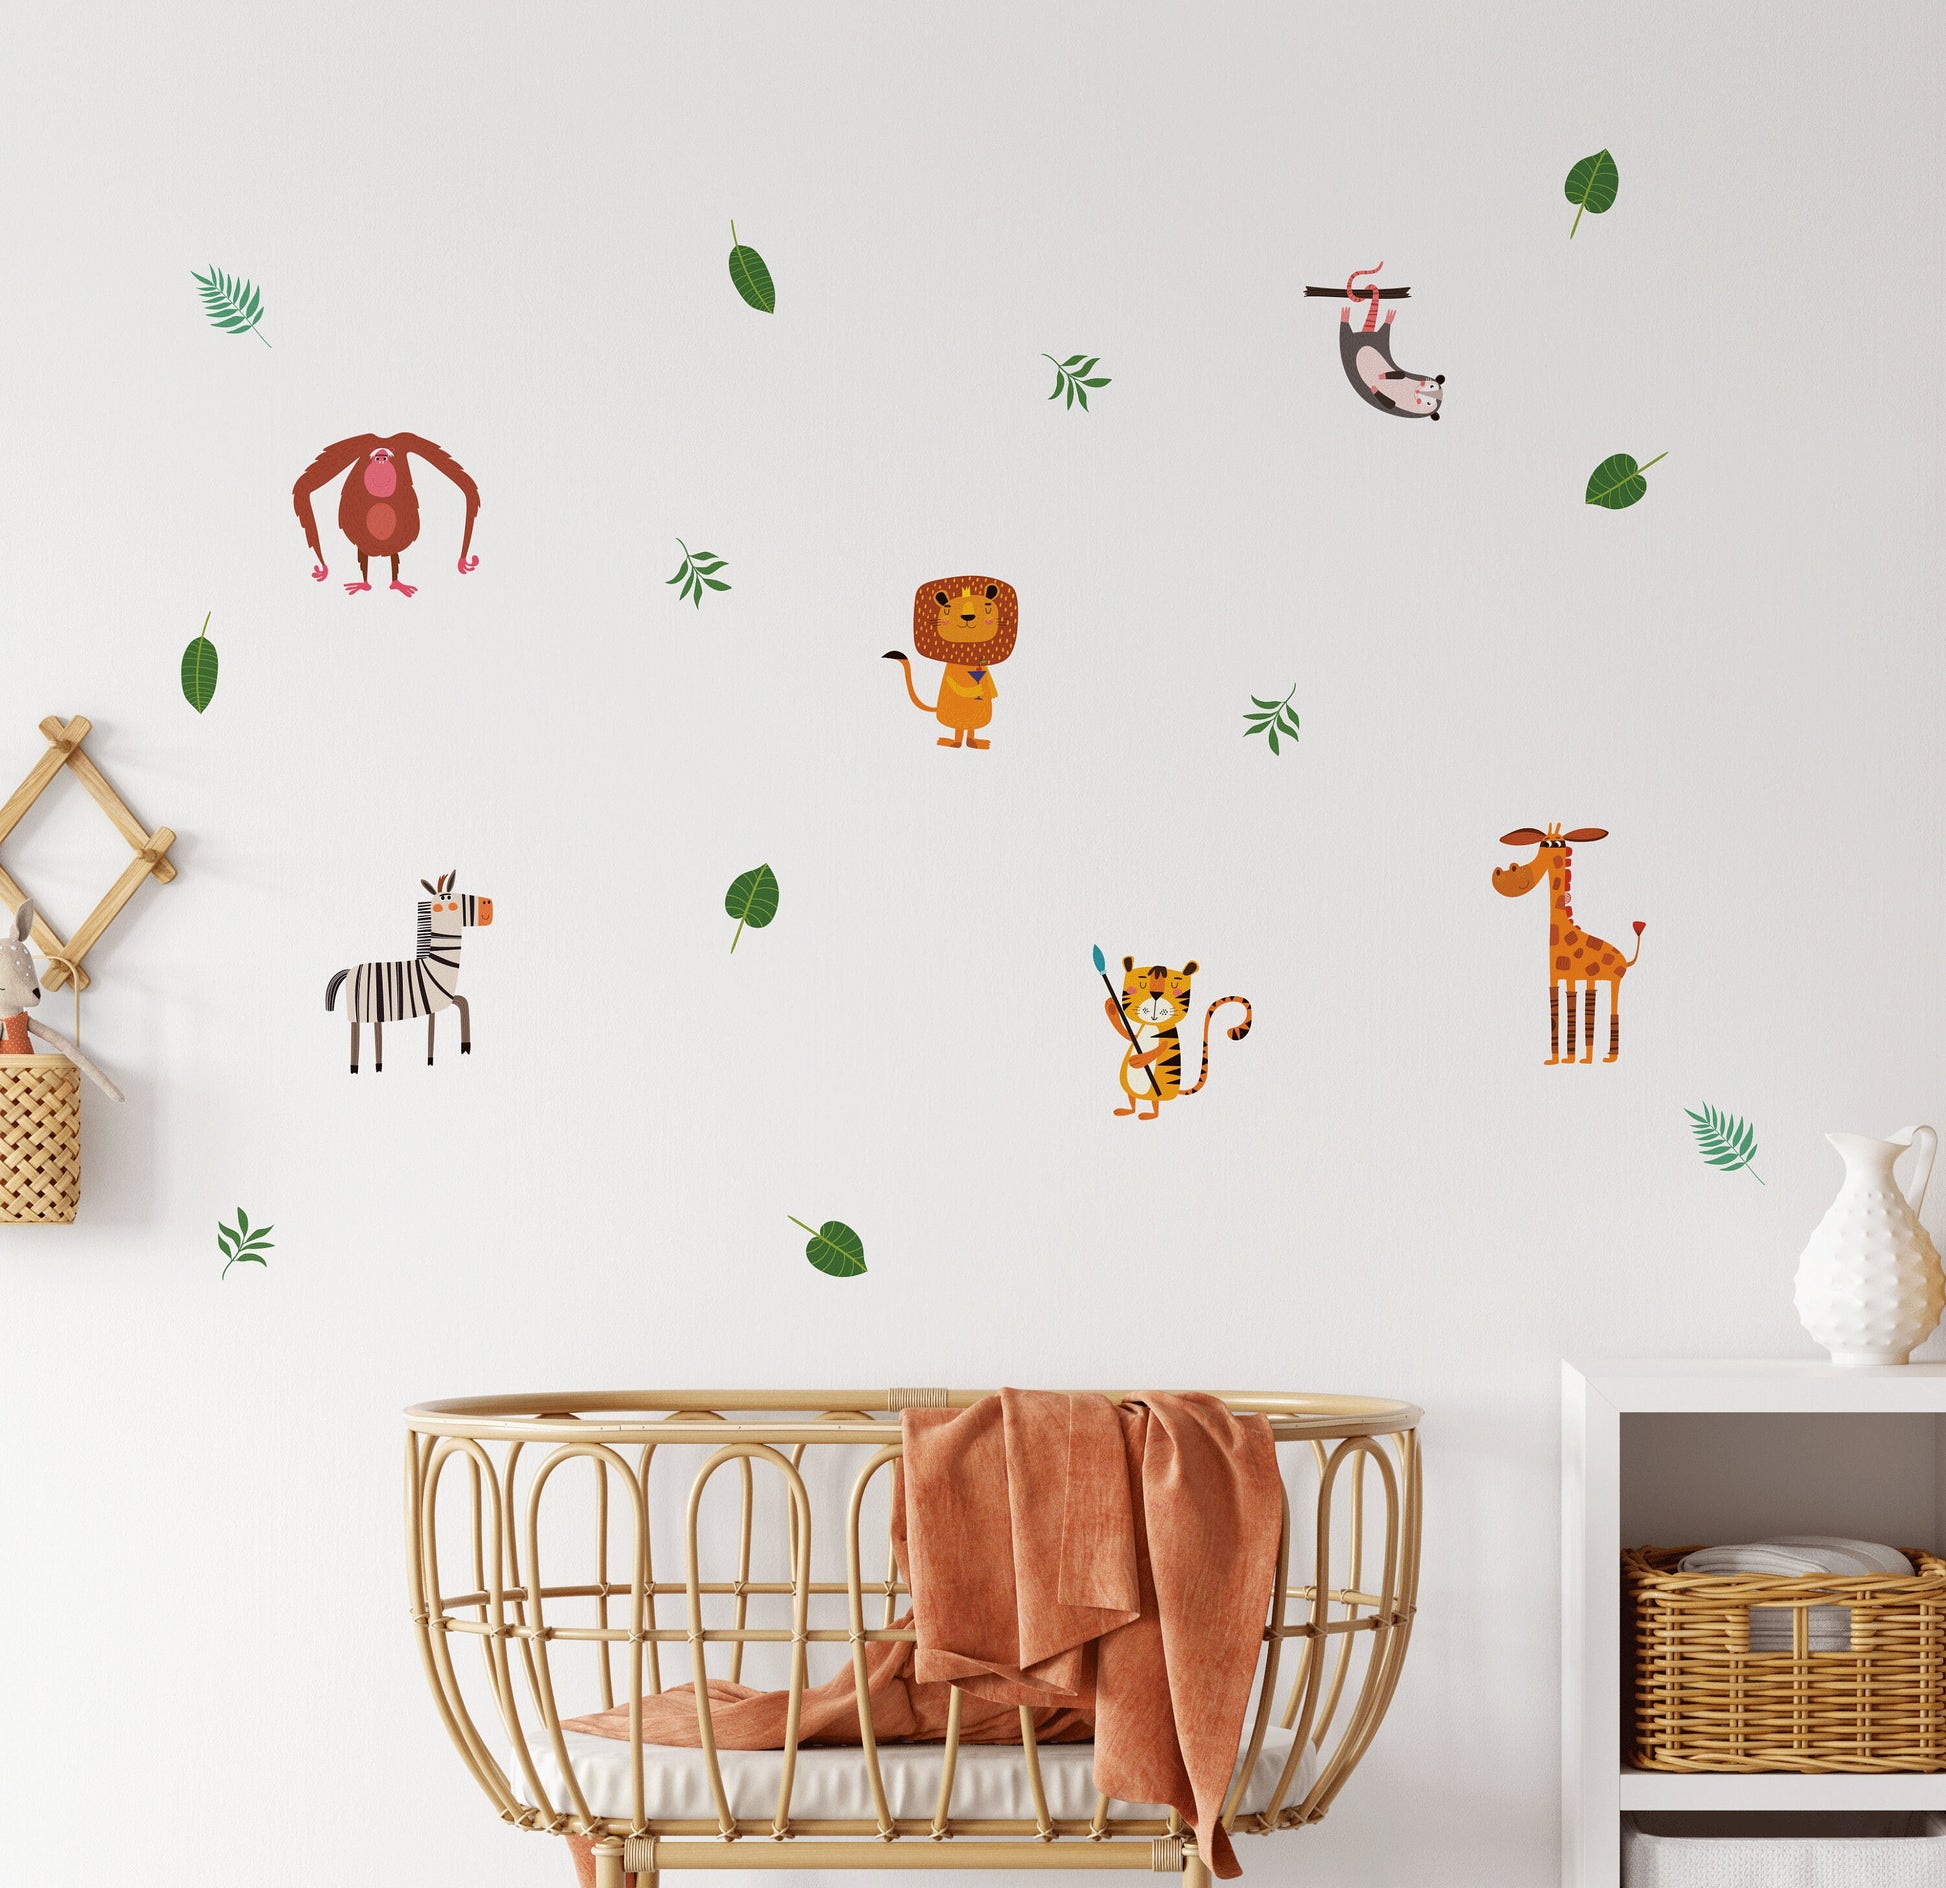 Children's Room Safari Animal Wall Stickers, Tropical Wall Decal Stickers, Giraffe Monkey Lion Zebra Wall Art